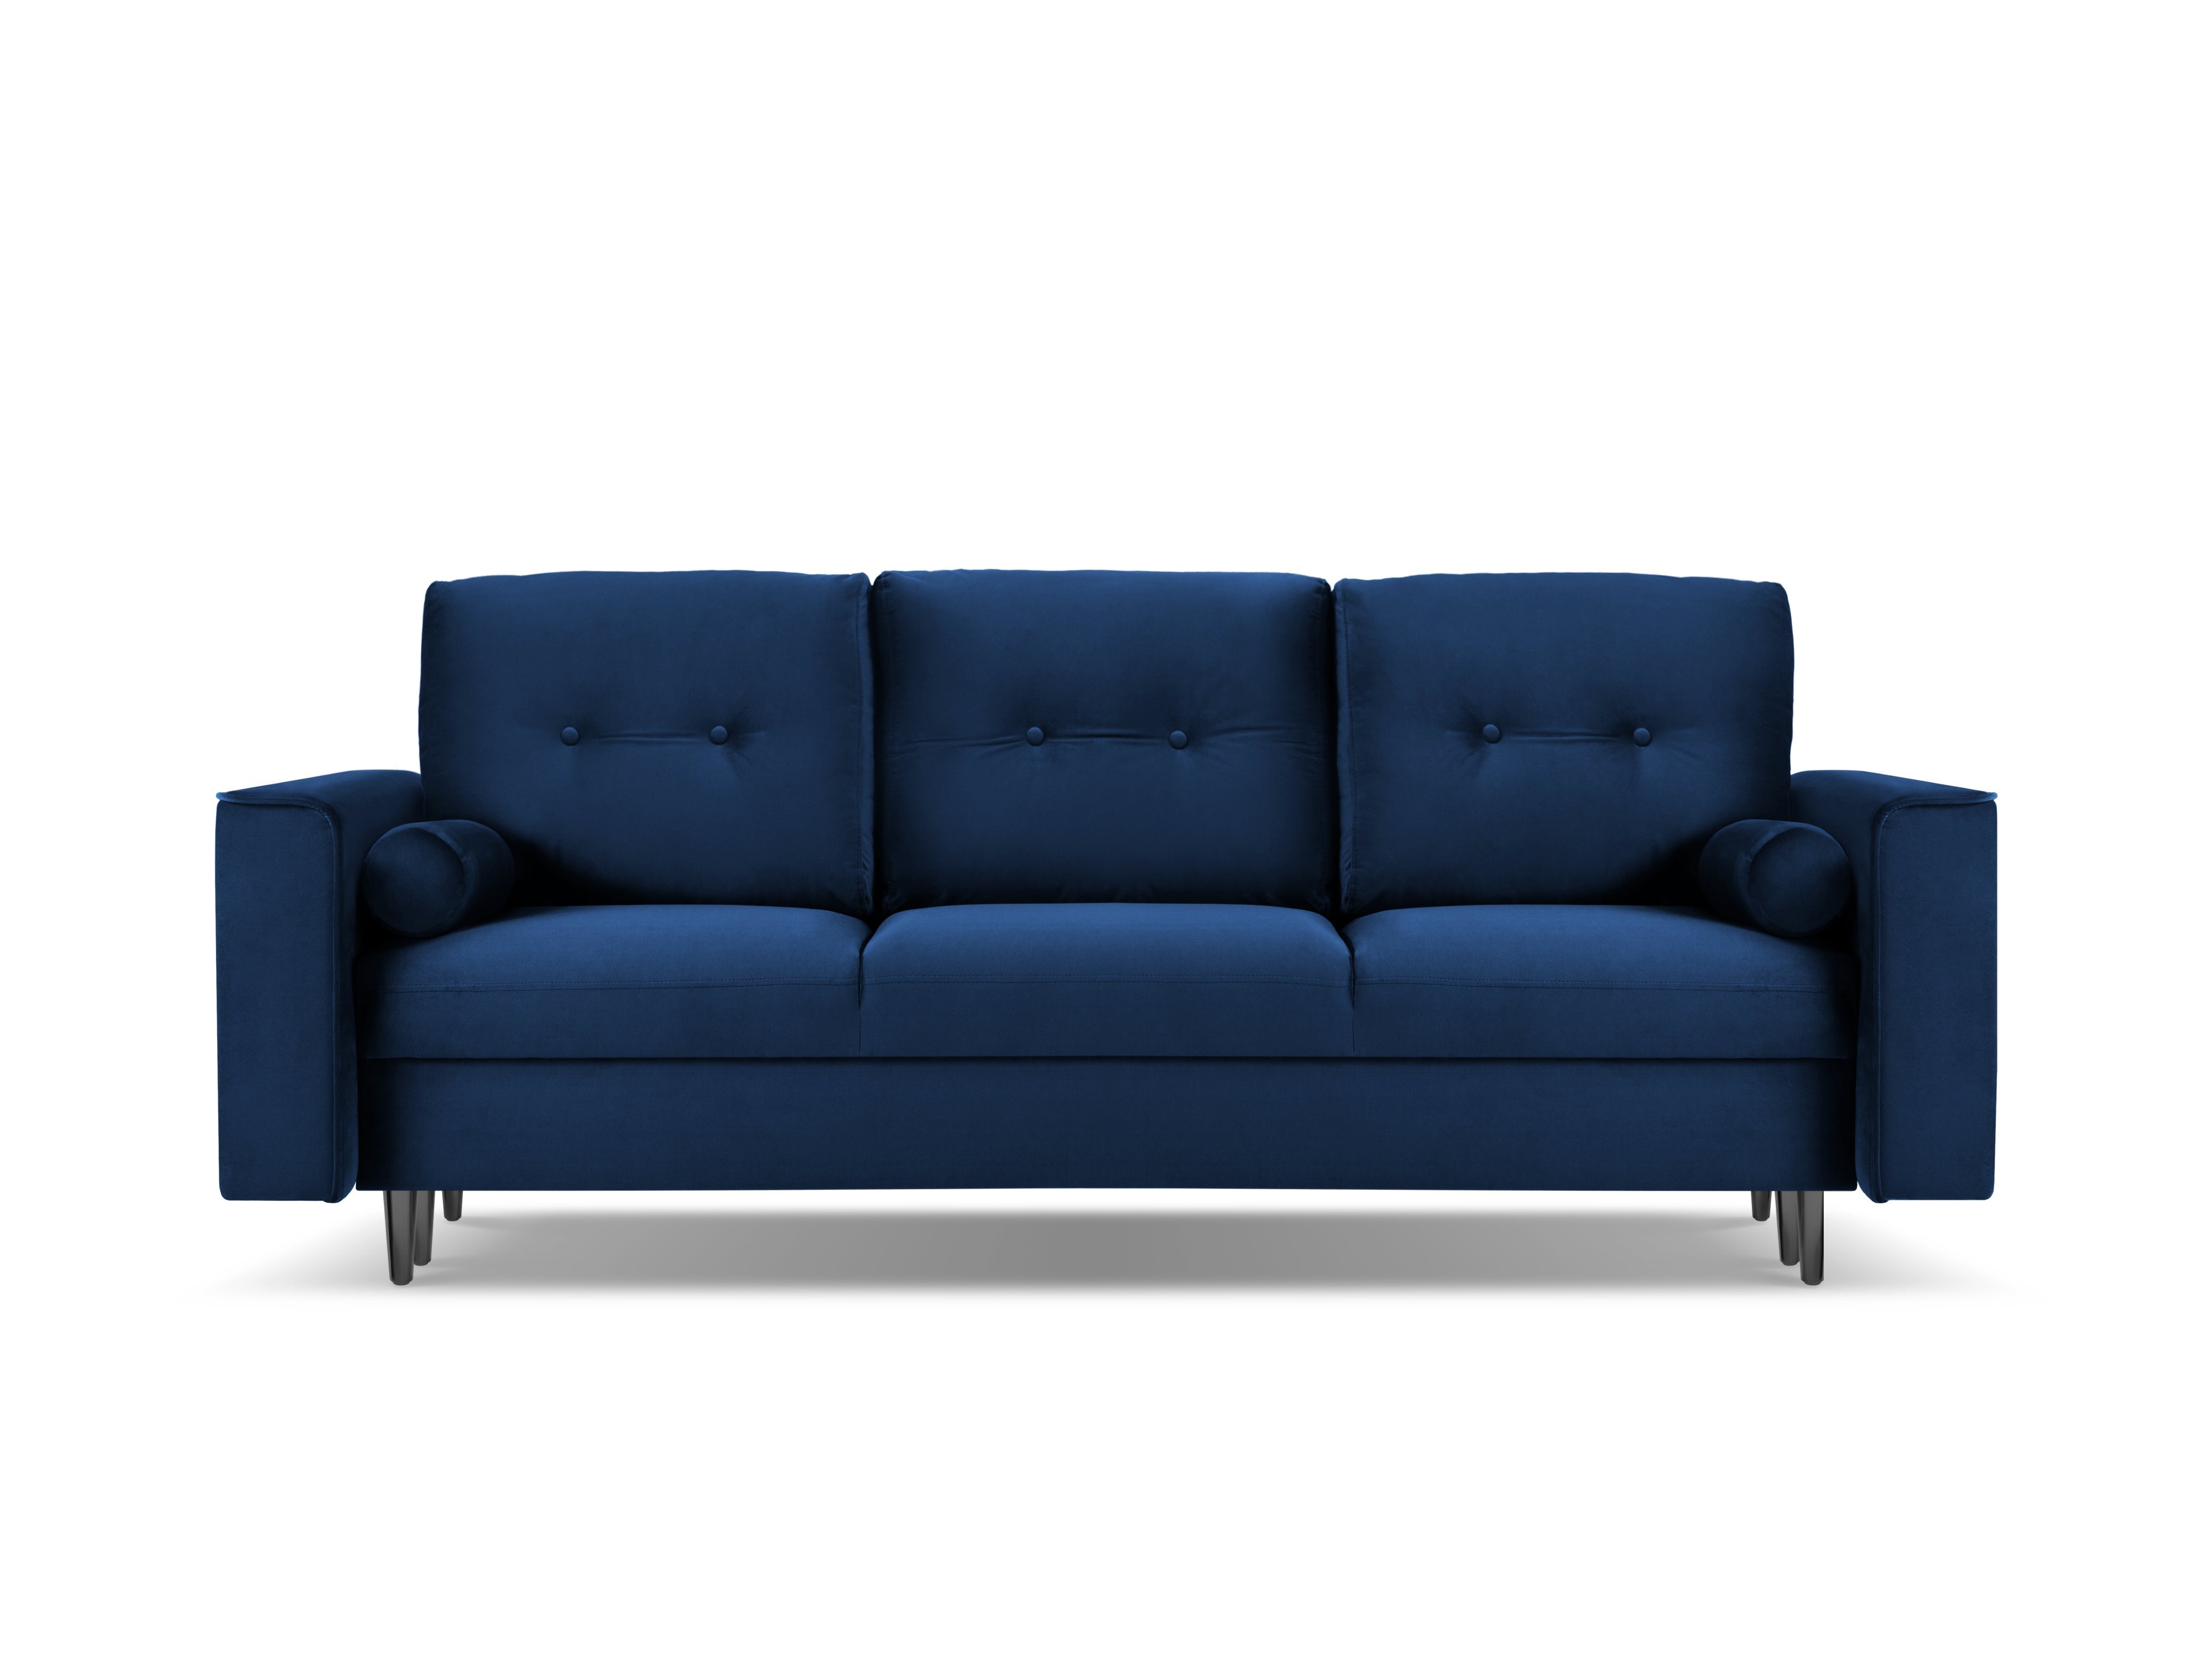 Blue sofa with a black base